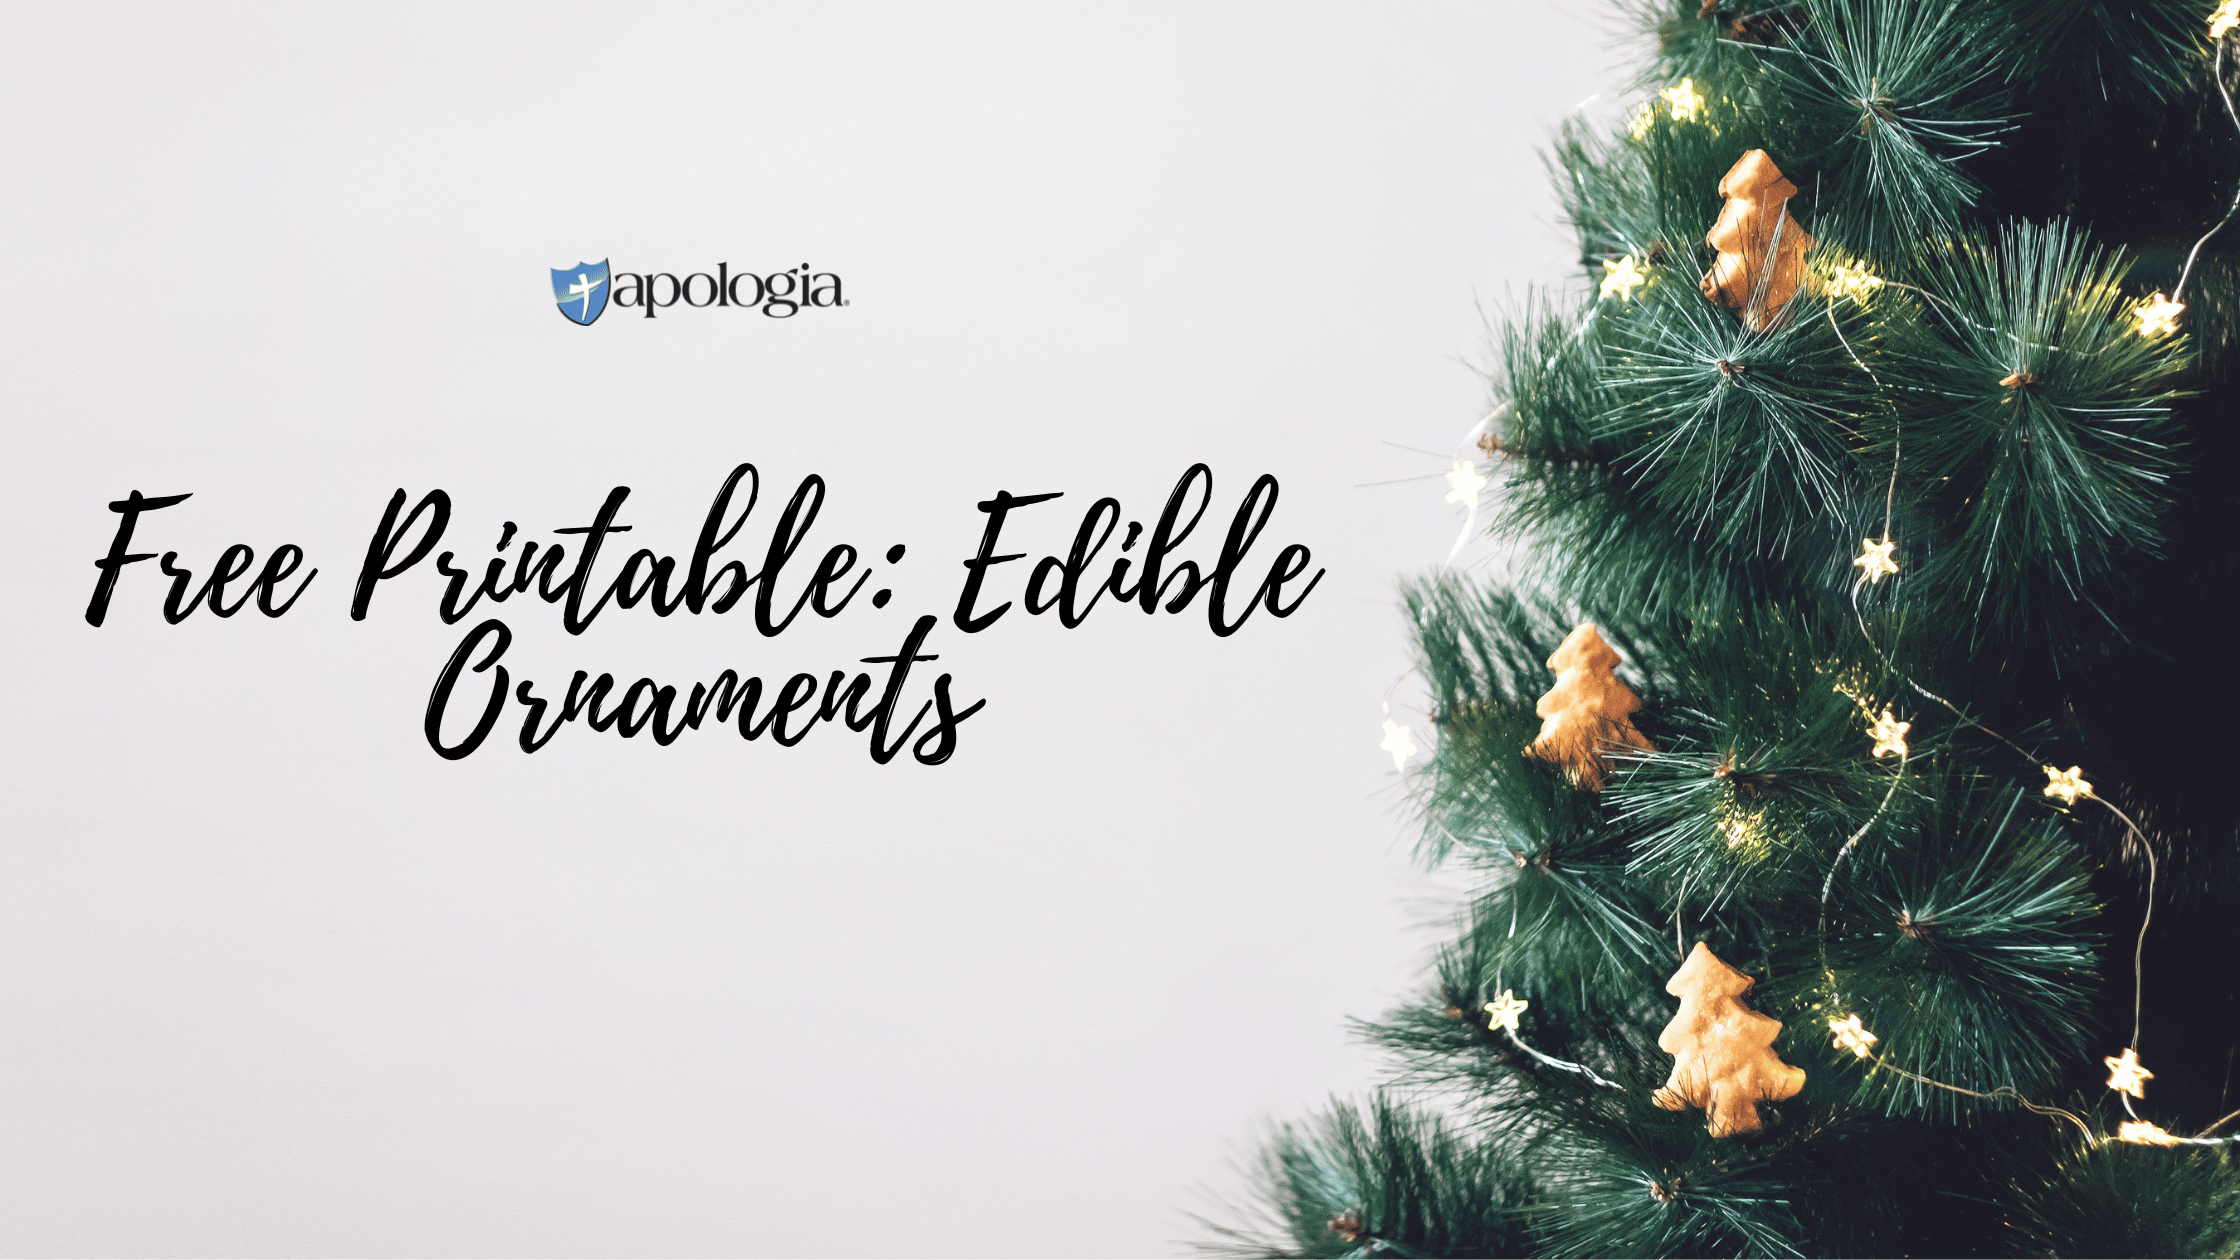 Free Printable Edible Ornaments